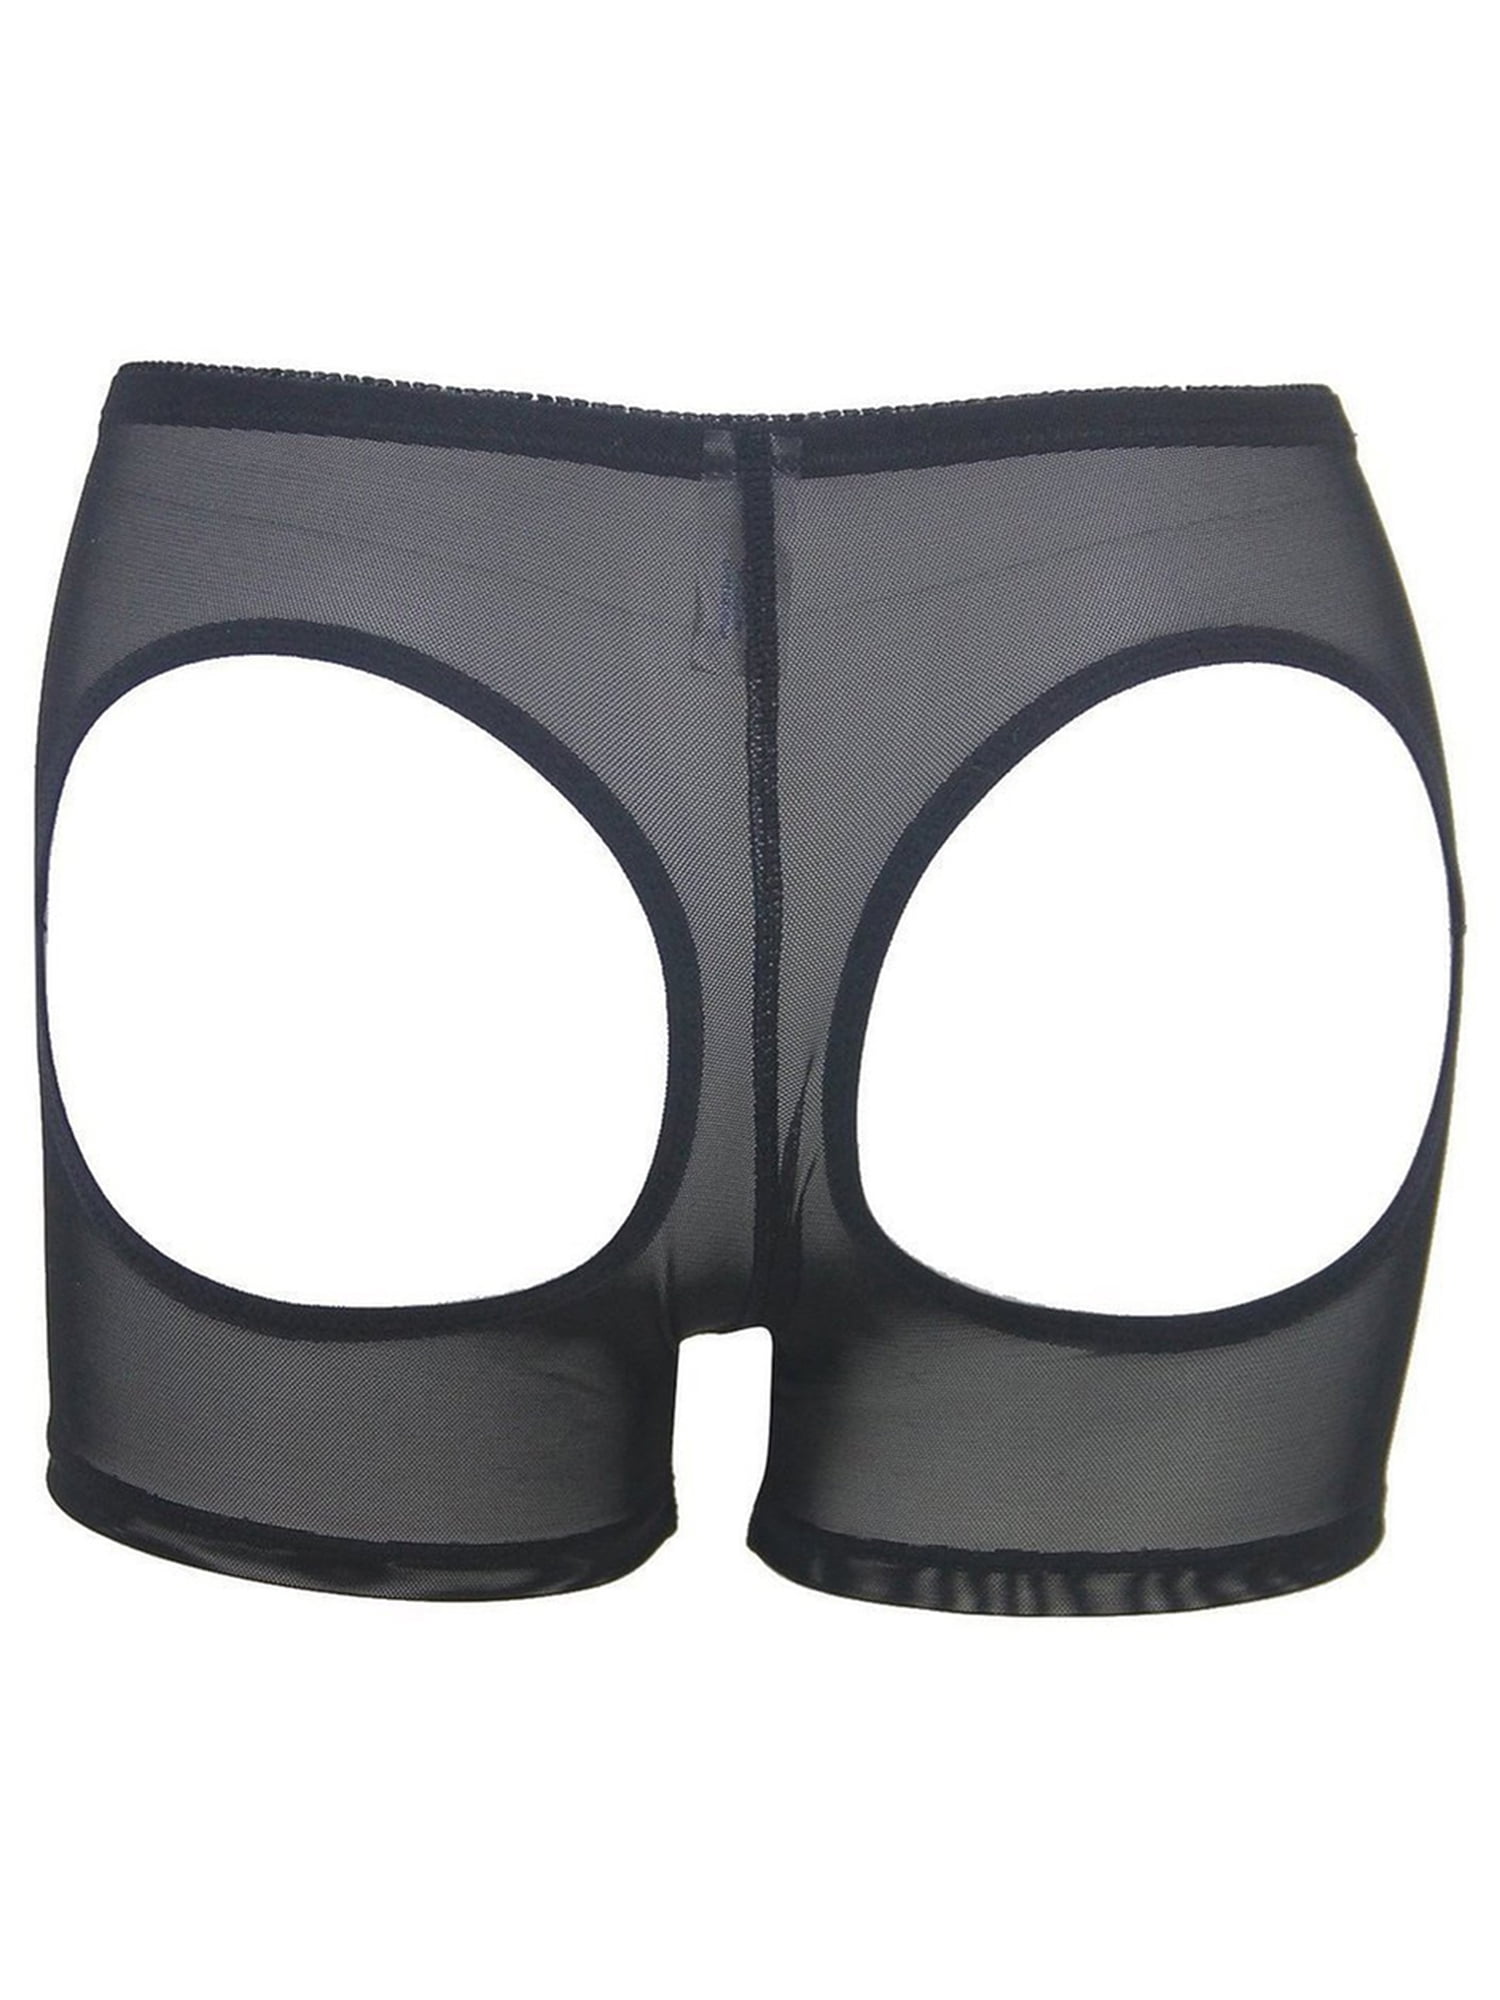 SAYFUT Womens Butt Lifter Panties Shapewear Body Shorts Enhancer Shaper  Panty Seamless Black Plus Size S-3XL 